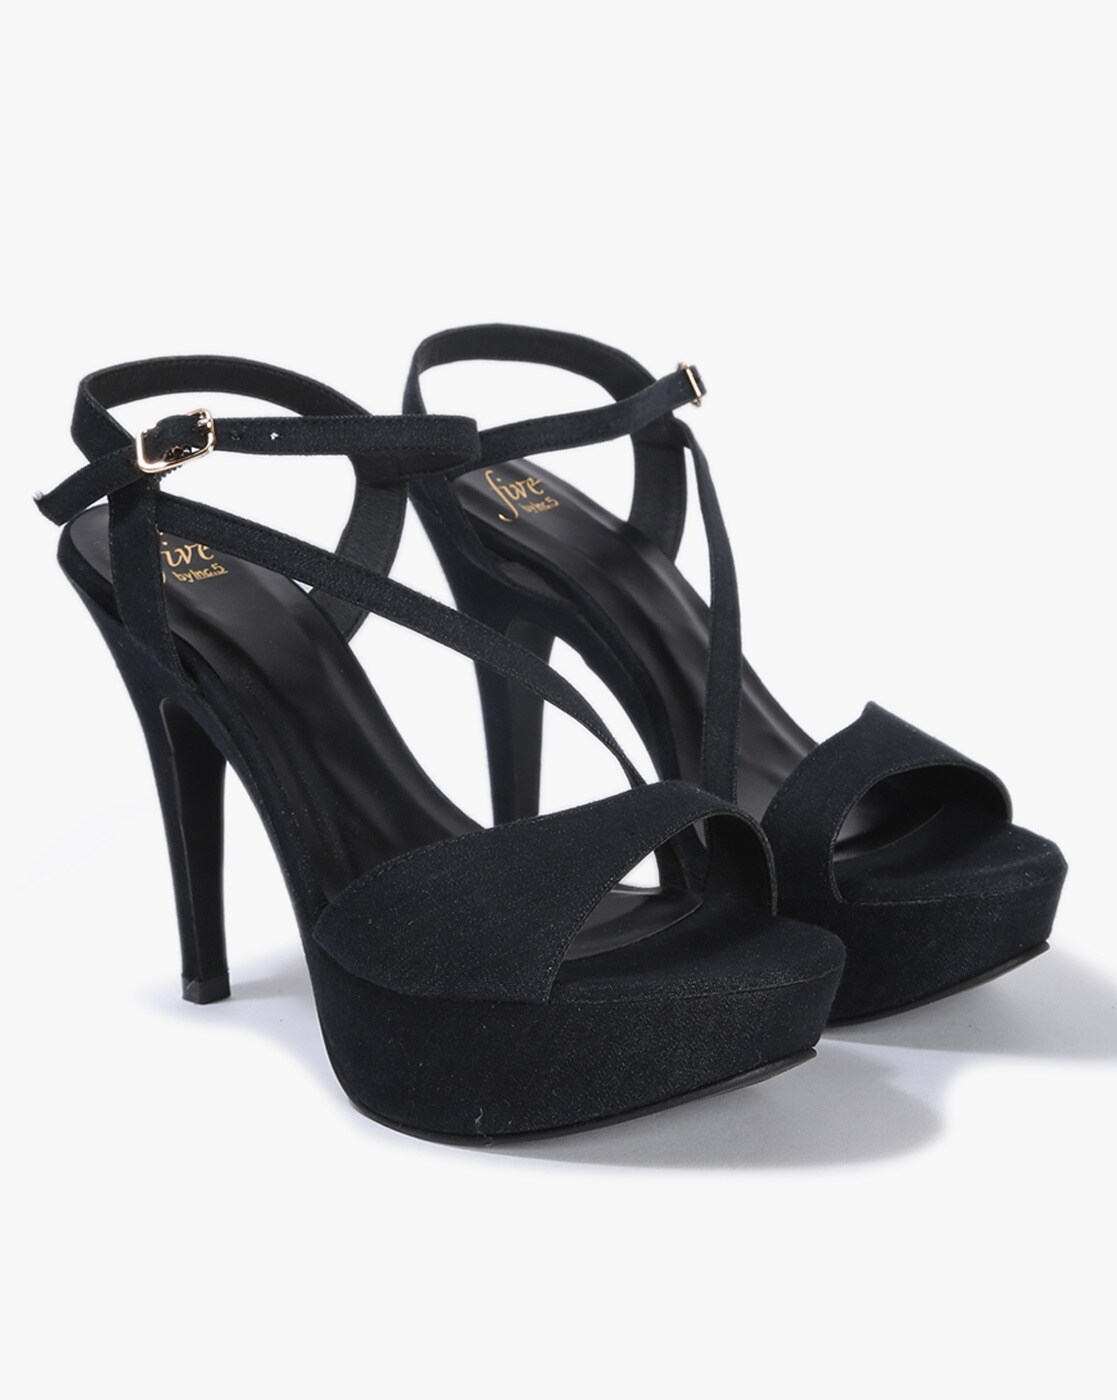 WIFKLSIIPG black heels strappy plastic sandals heels sandals India | Ubuy